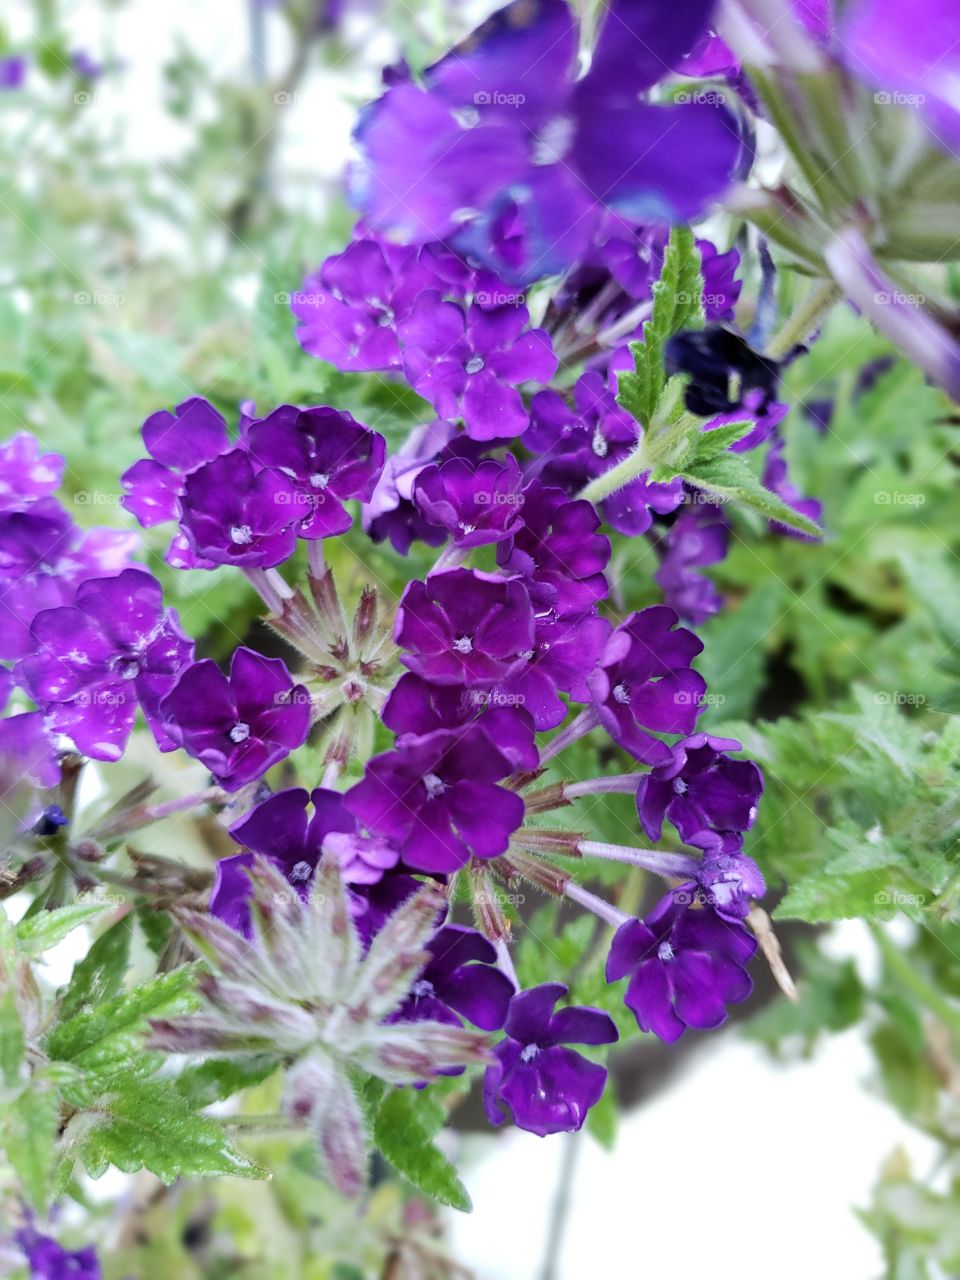 Purple cluster of flowers